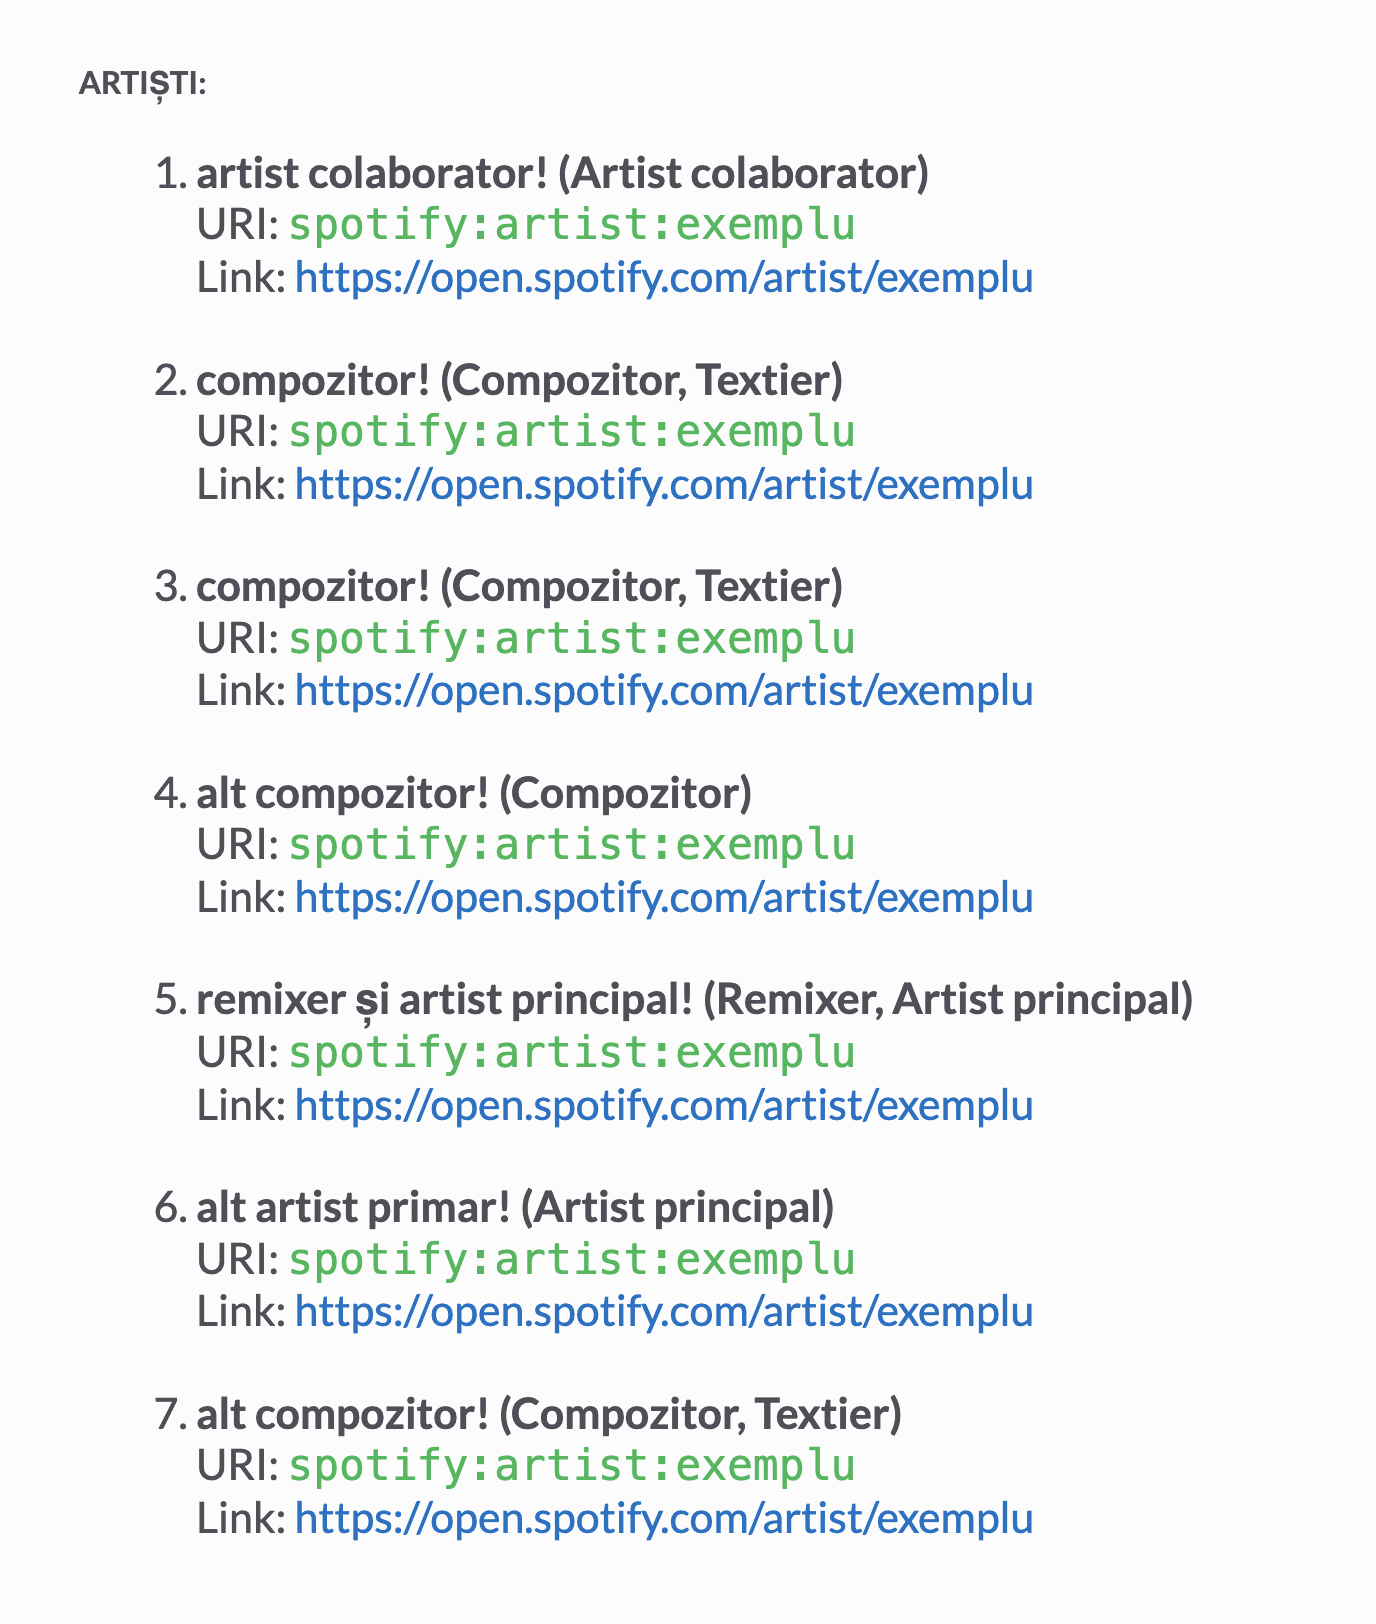 ro_artists_collaborators.png